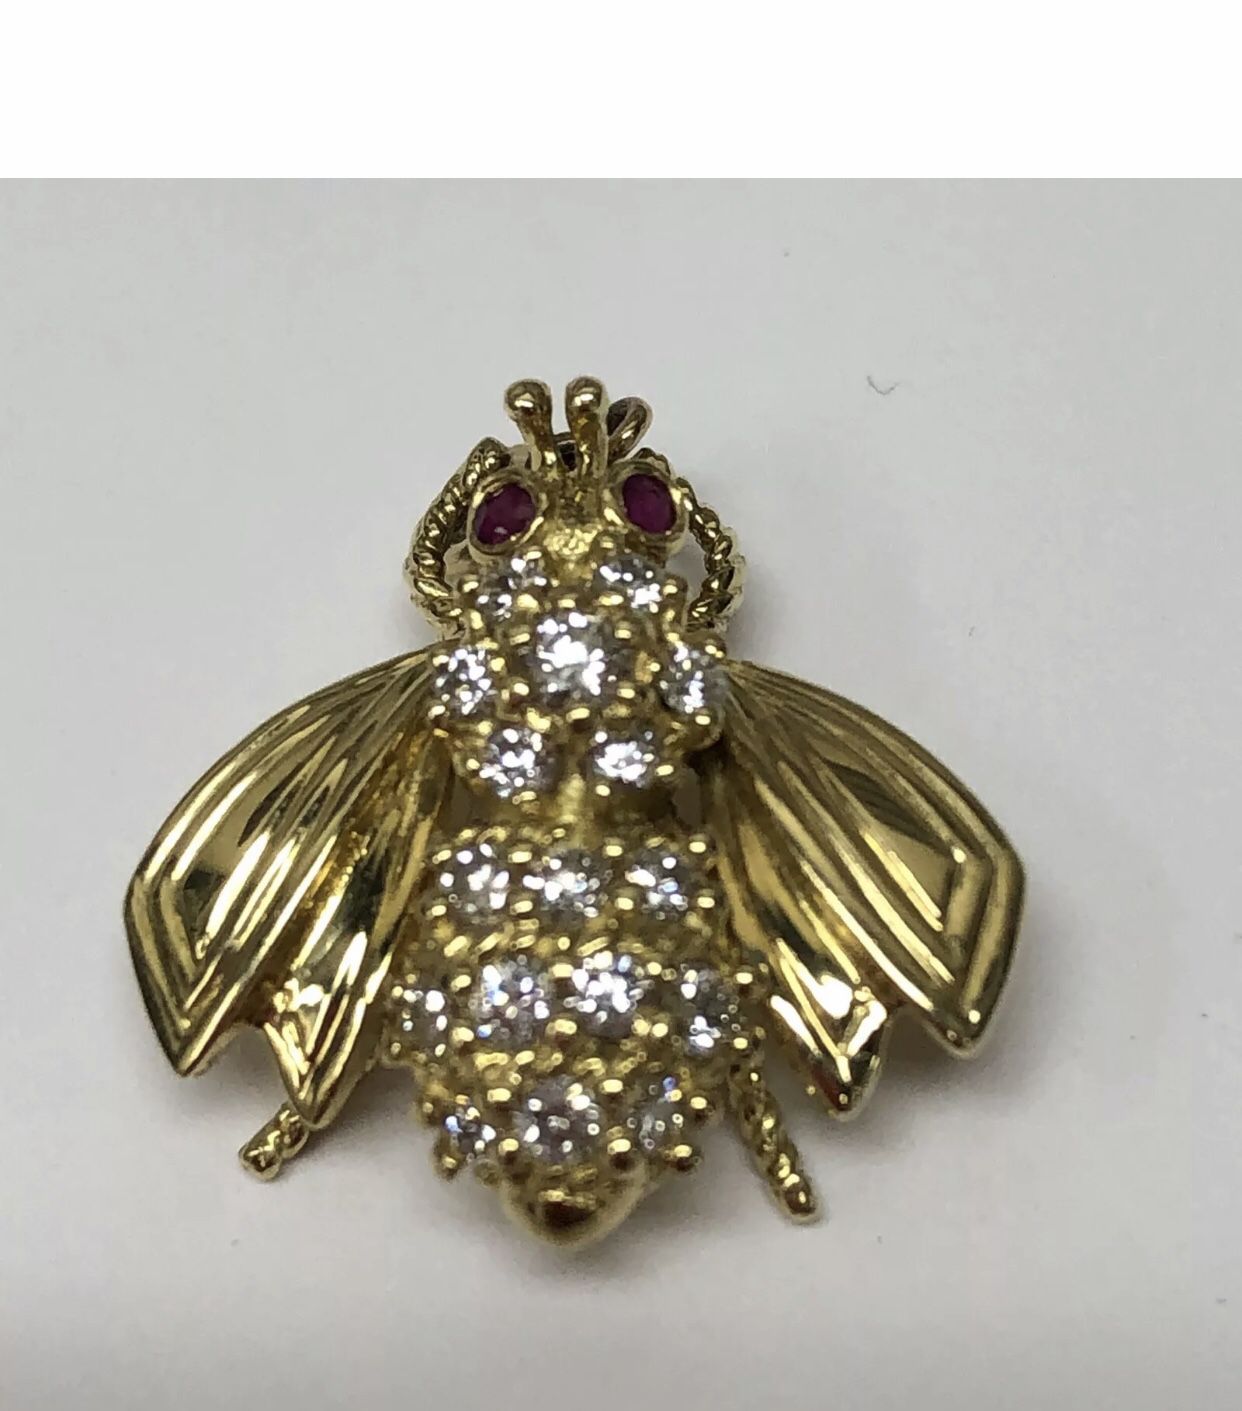 Tiffany and Co. Bumble Bee Pin - 18k Gold Diamond & Rubies